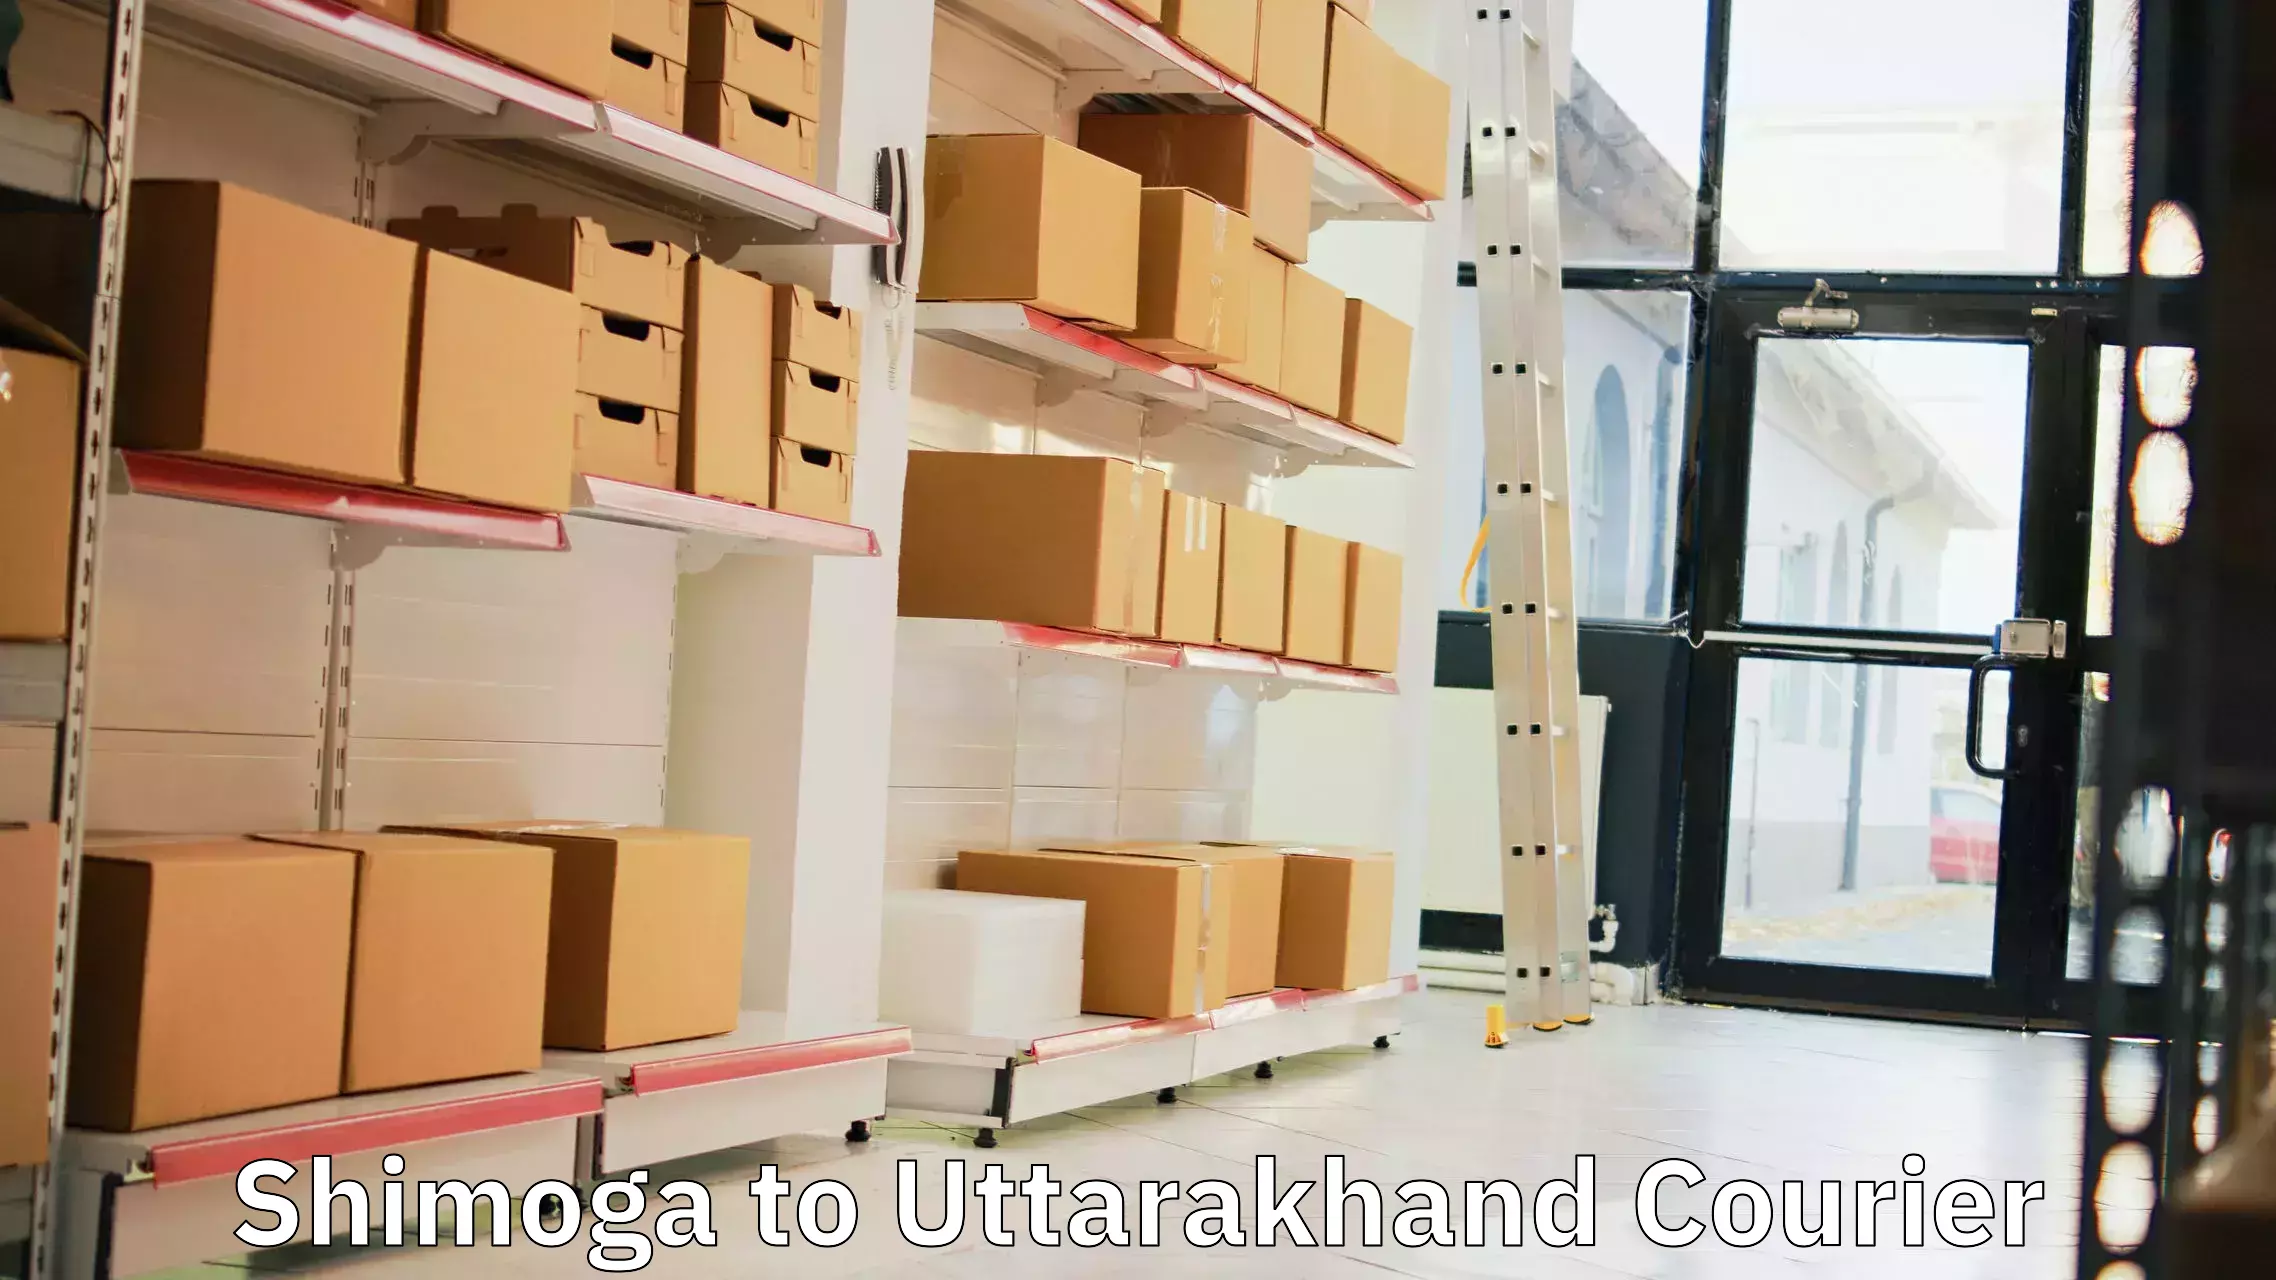 Courier service comparison Shimoga to Uttarakhand